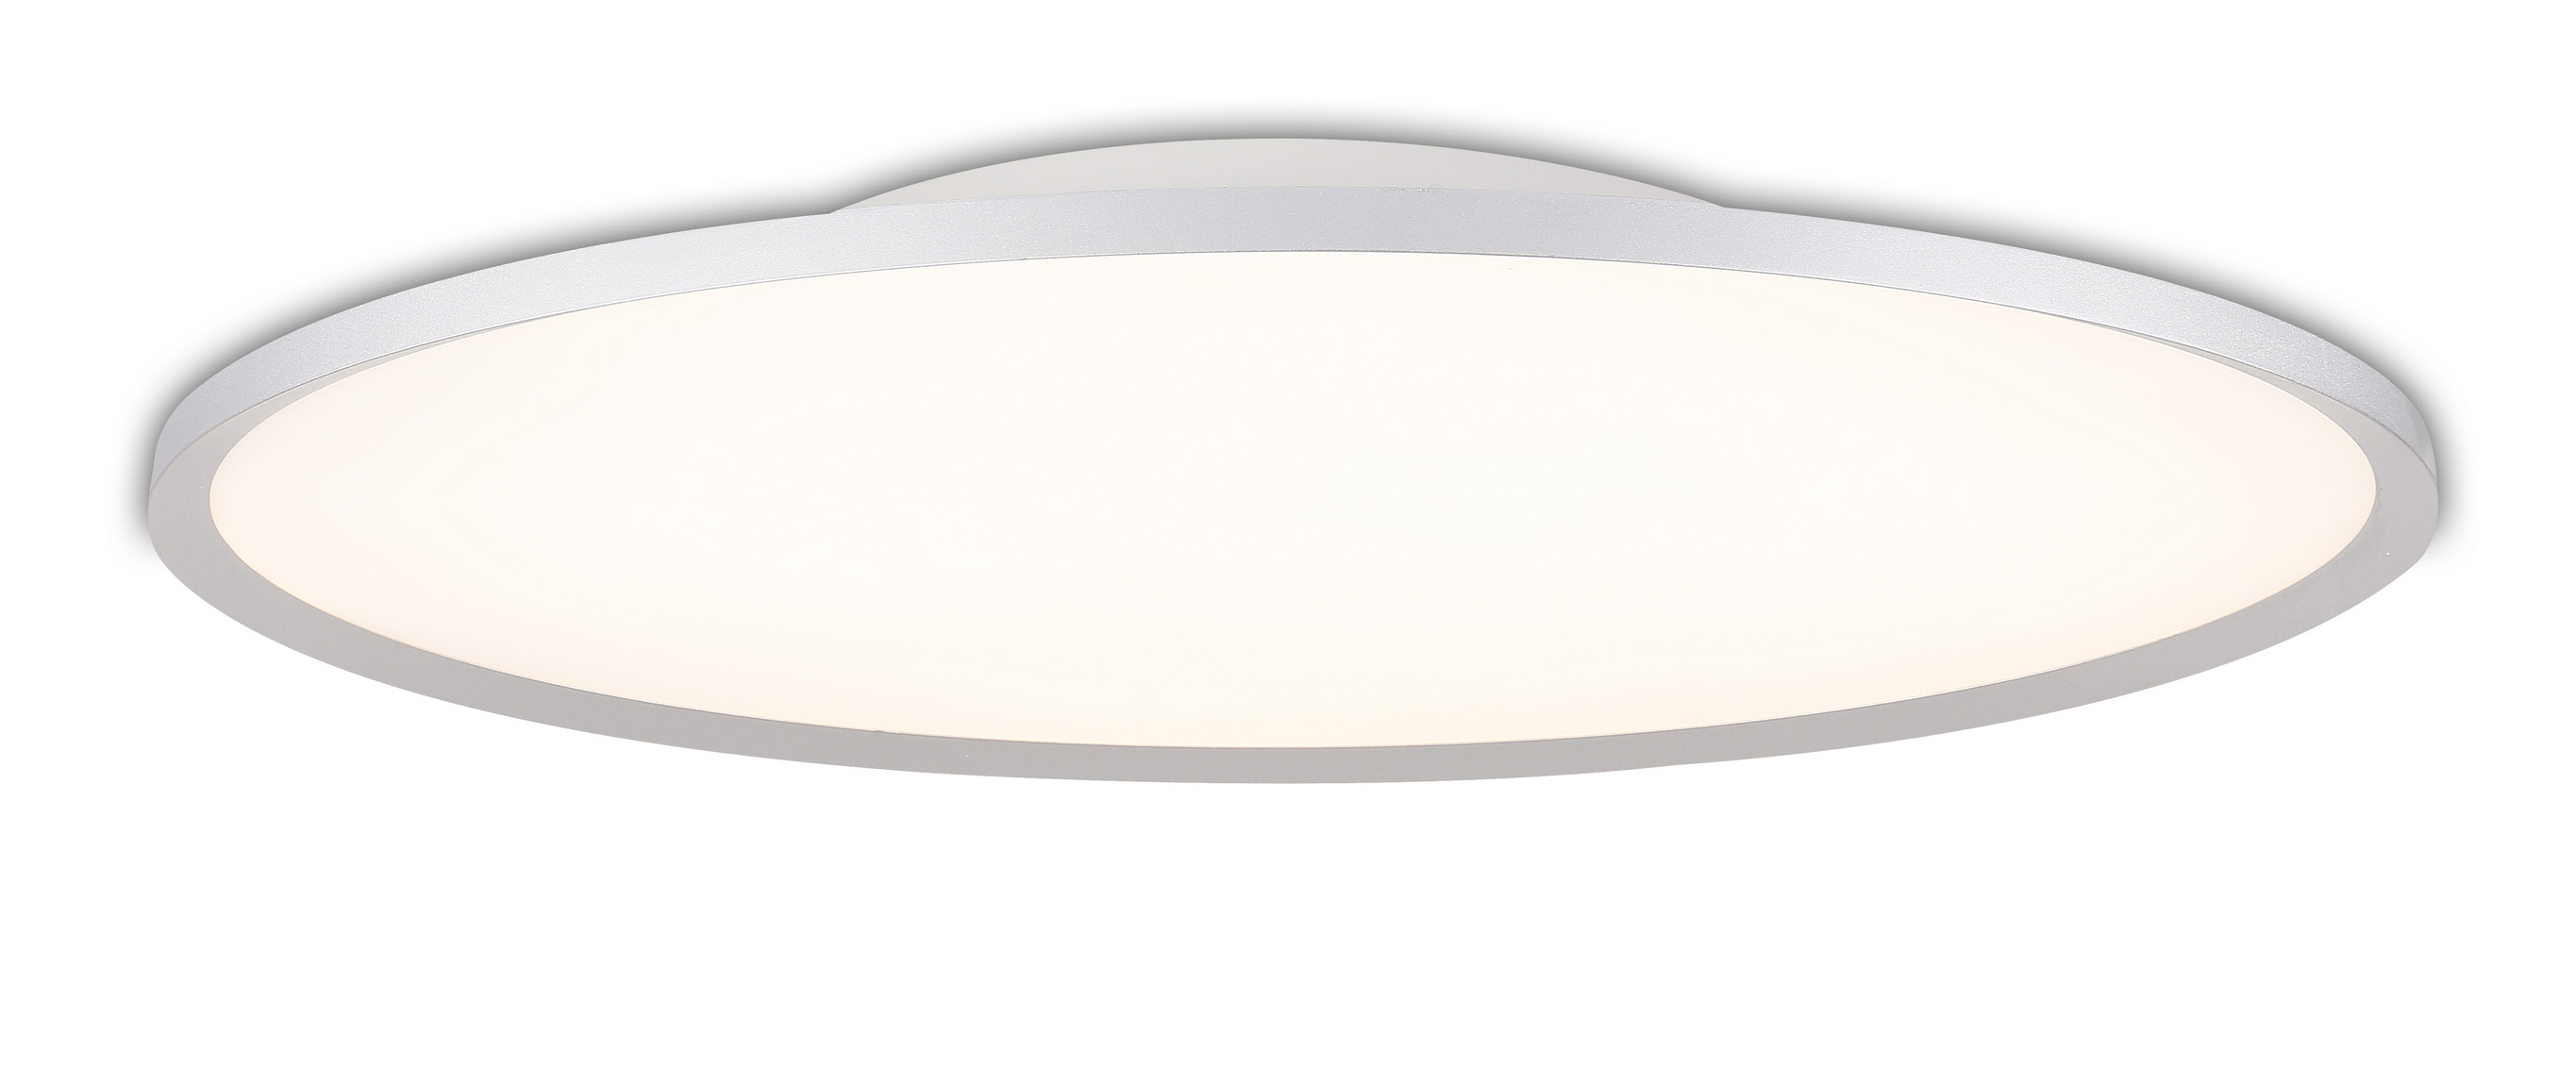 Oval Ceiling Lamp 椭圆面板灯